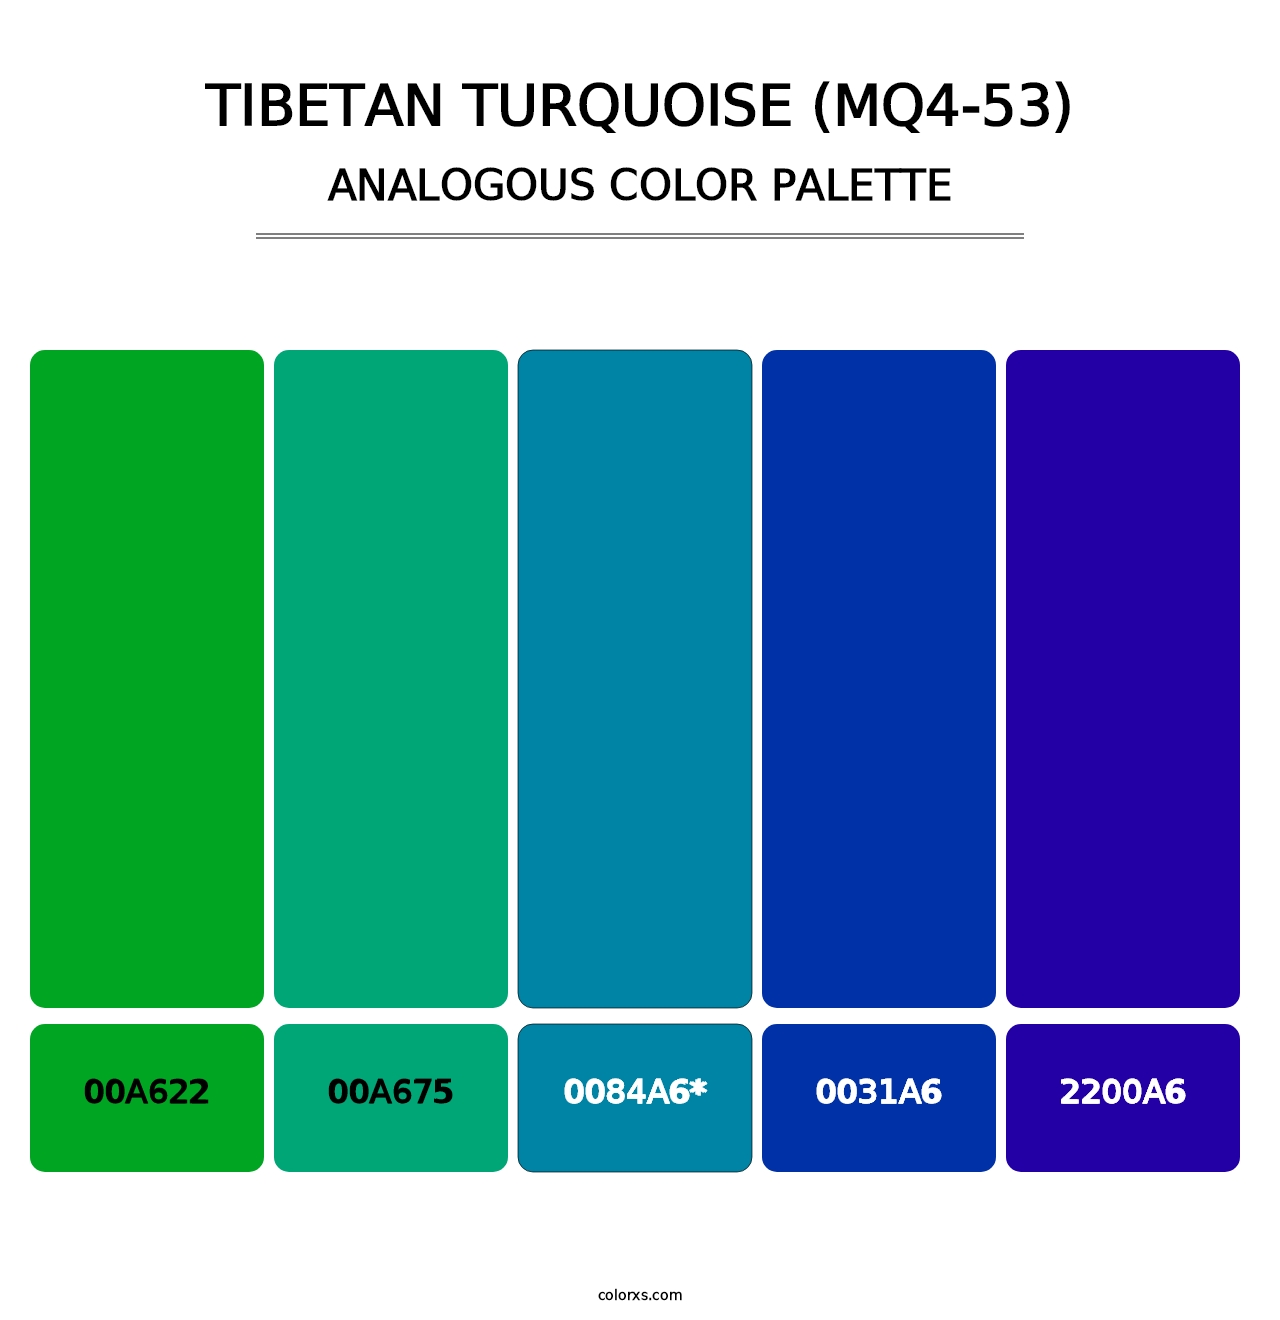 Tibetan Turquoise (MQ4-53) - Analogous Color Palette